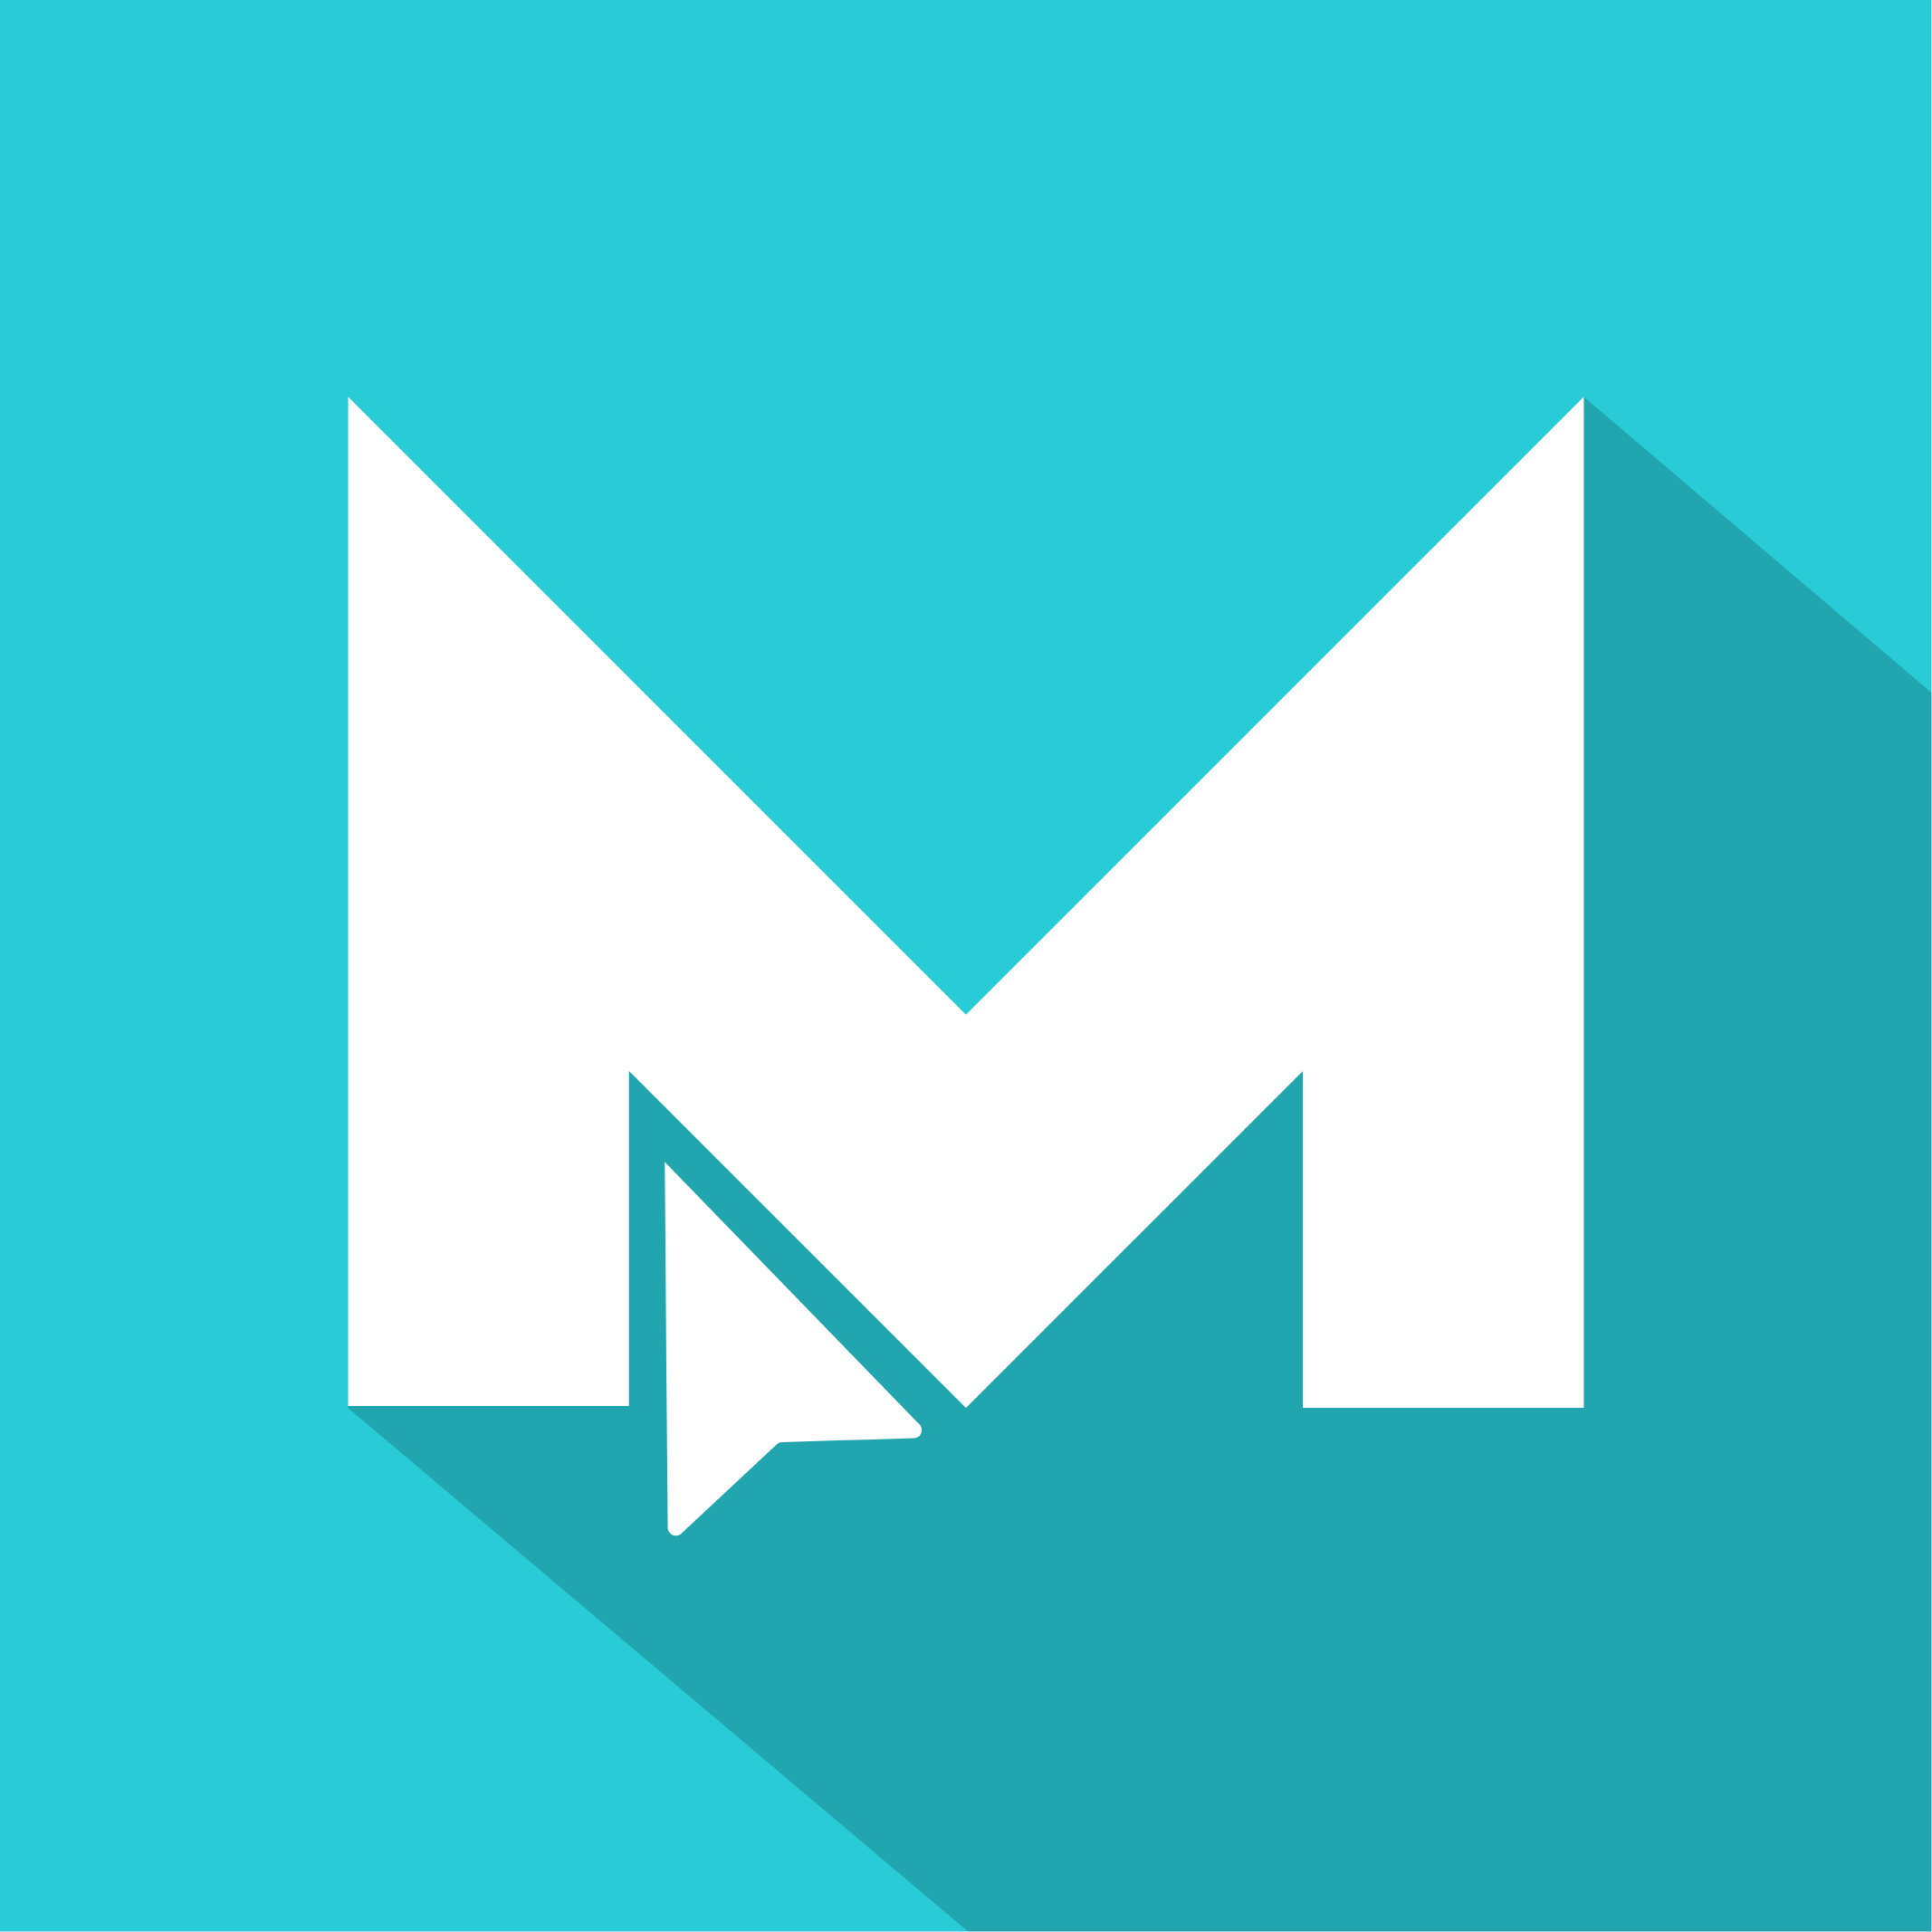 Mtc logo